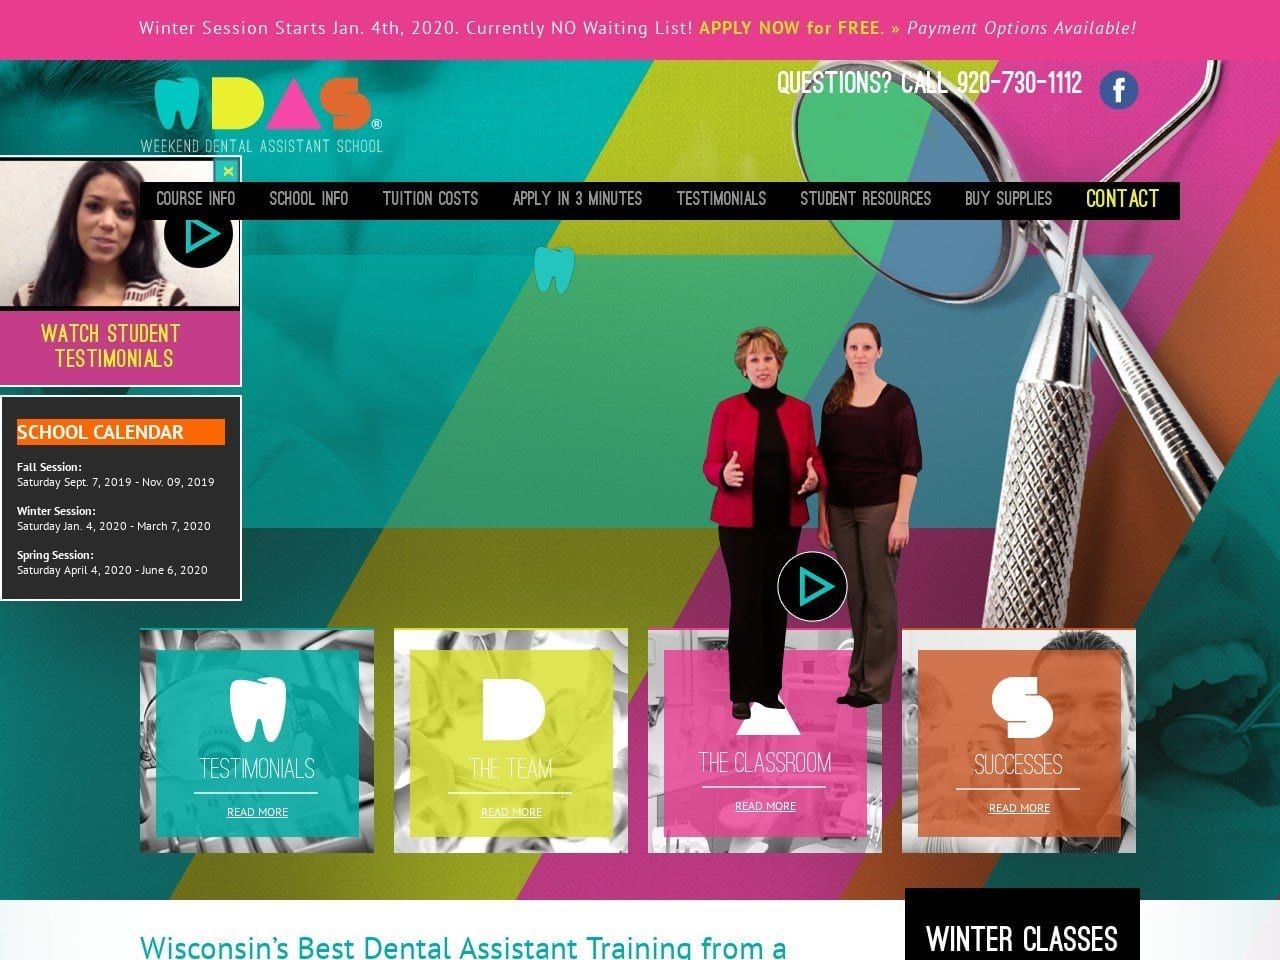 Weekend Dental Assistant School Website Screenshot from weekenddentalassistant.com